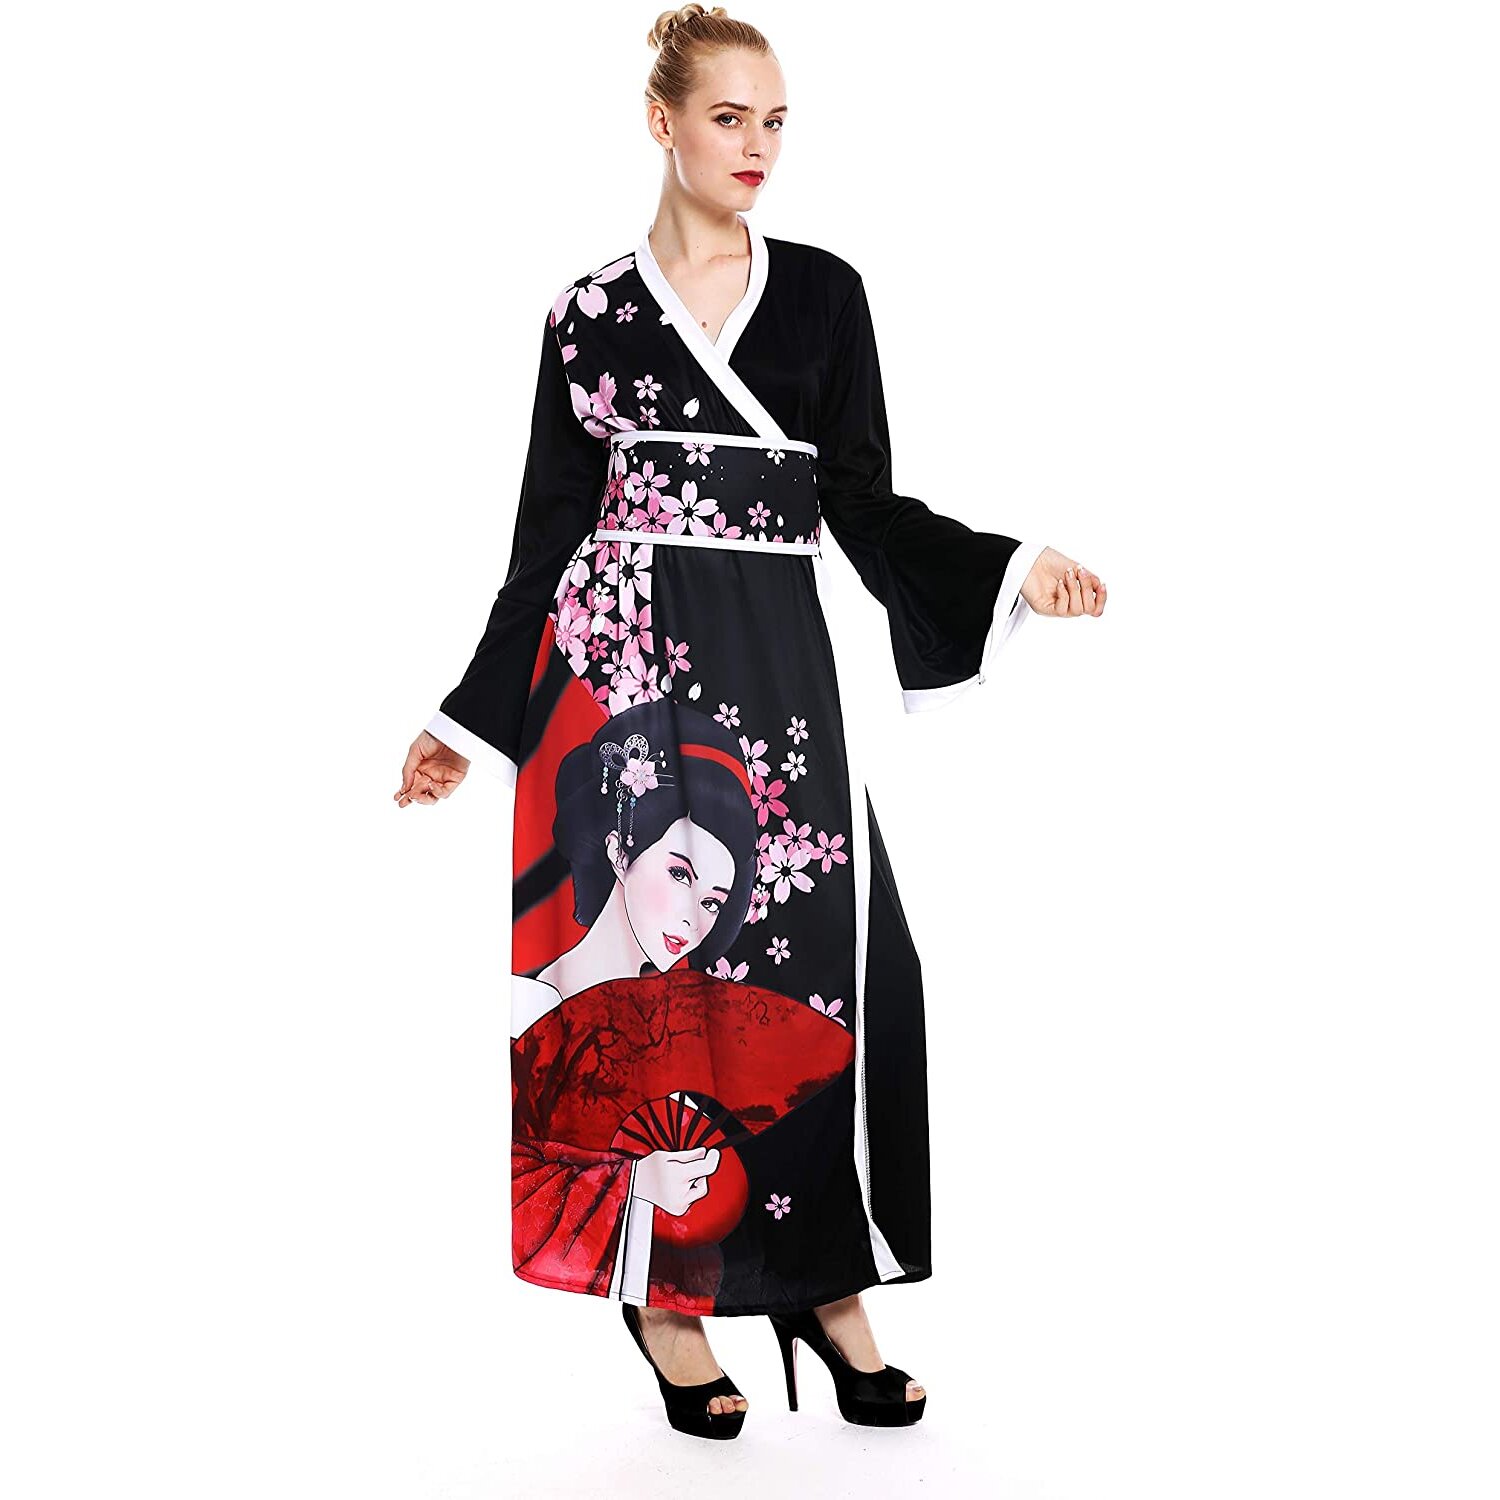 dressmeup - W-0288-S/M Lady Woman Costume Fancy Dress Halloween Kimono Japan Geisha Japanese China Girl Size S/M